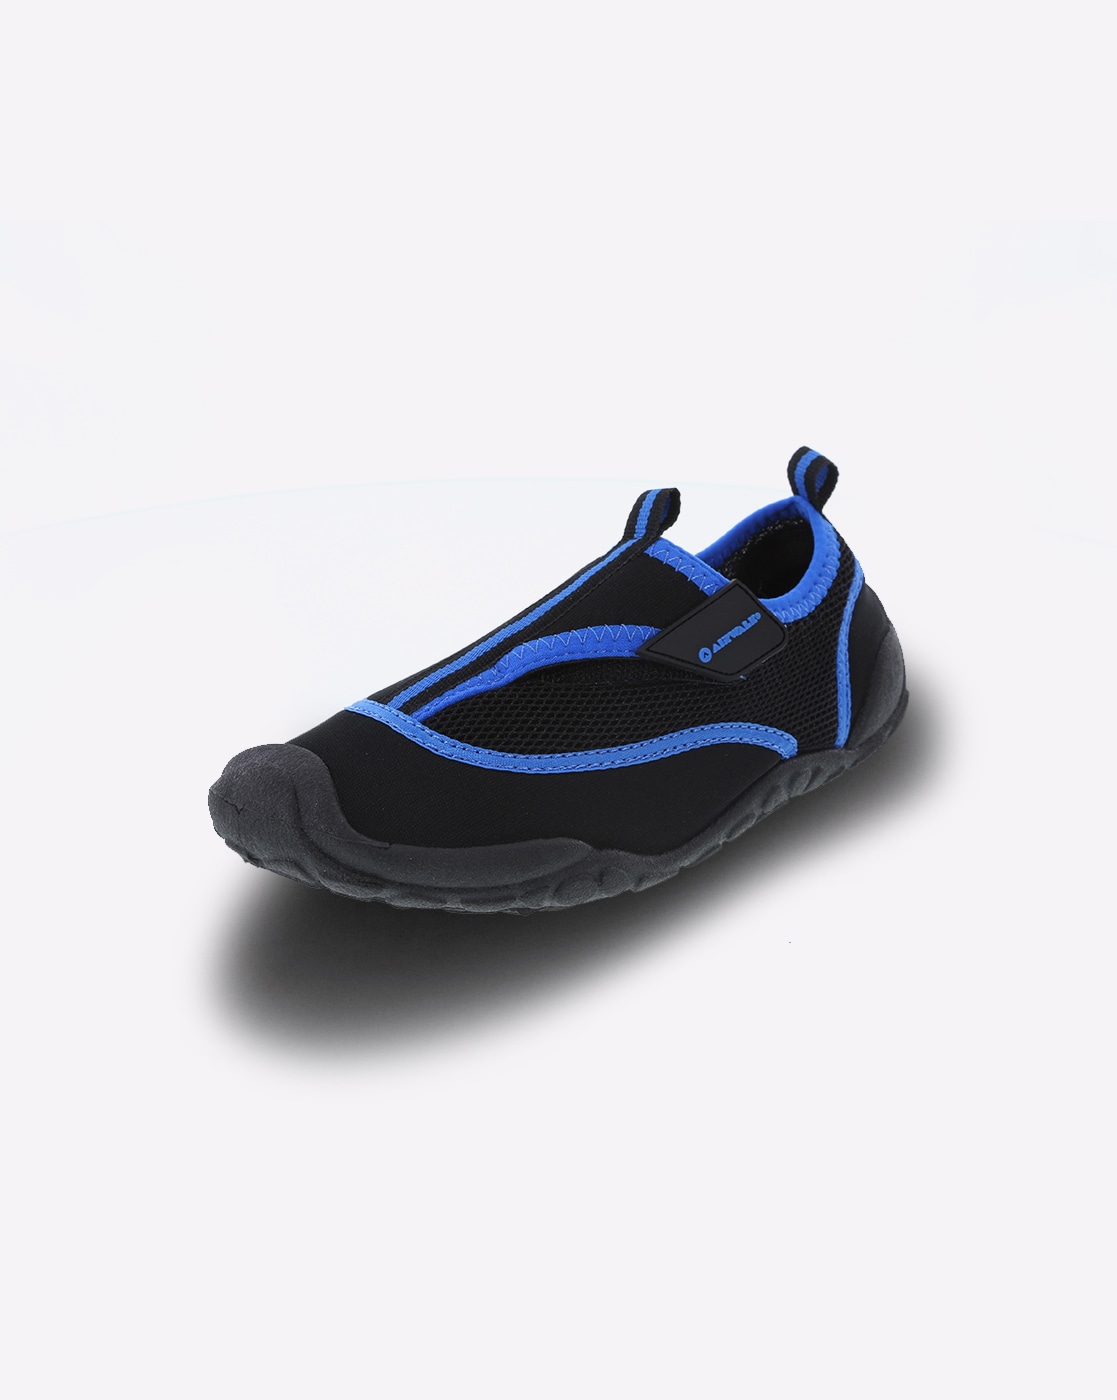 airwalk velcro shoes